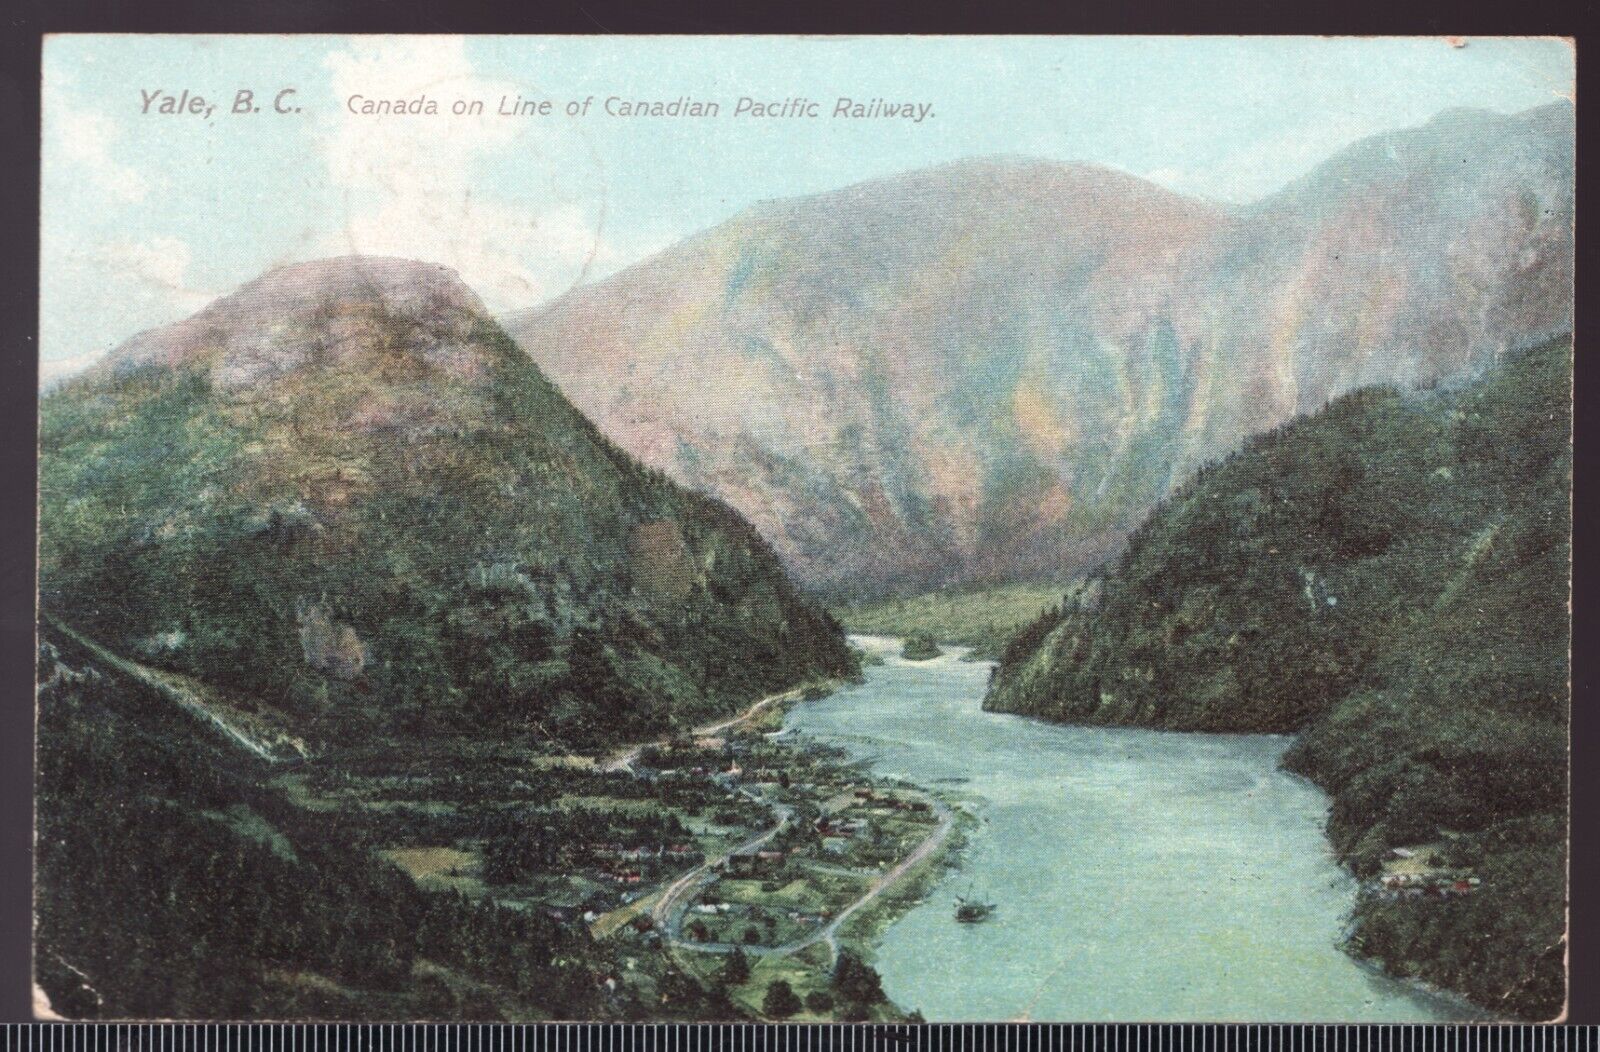 1907 RPPC Colored Postcard - posted - Yale, B.C. , C.P. Railway line.